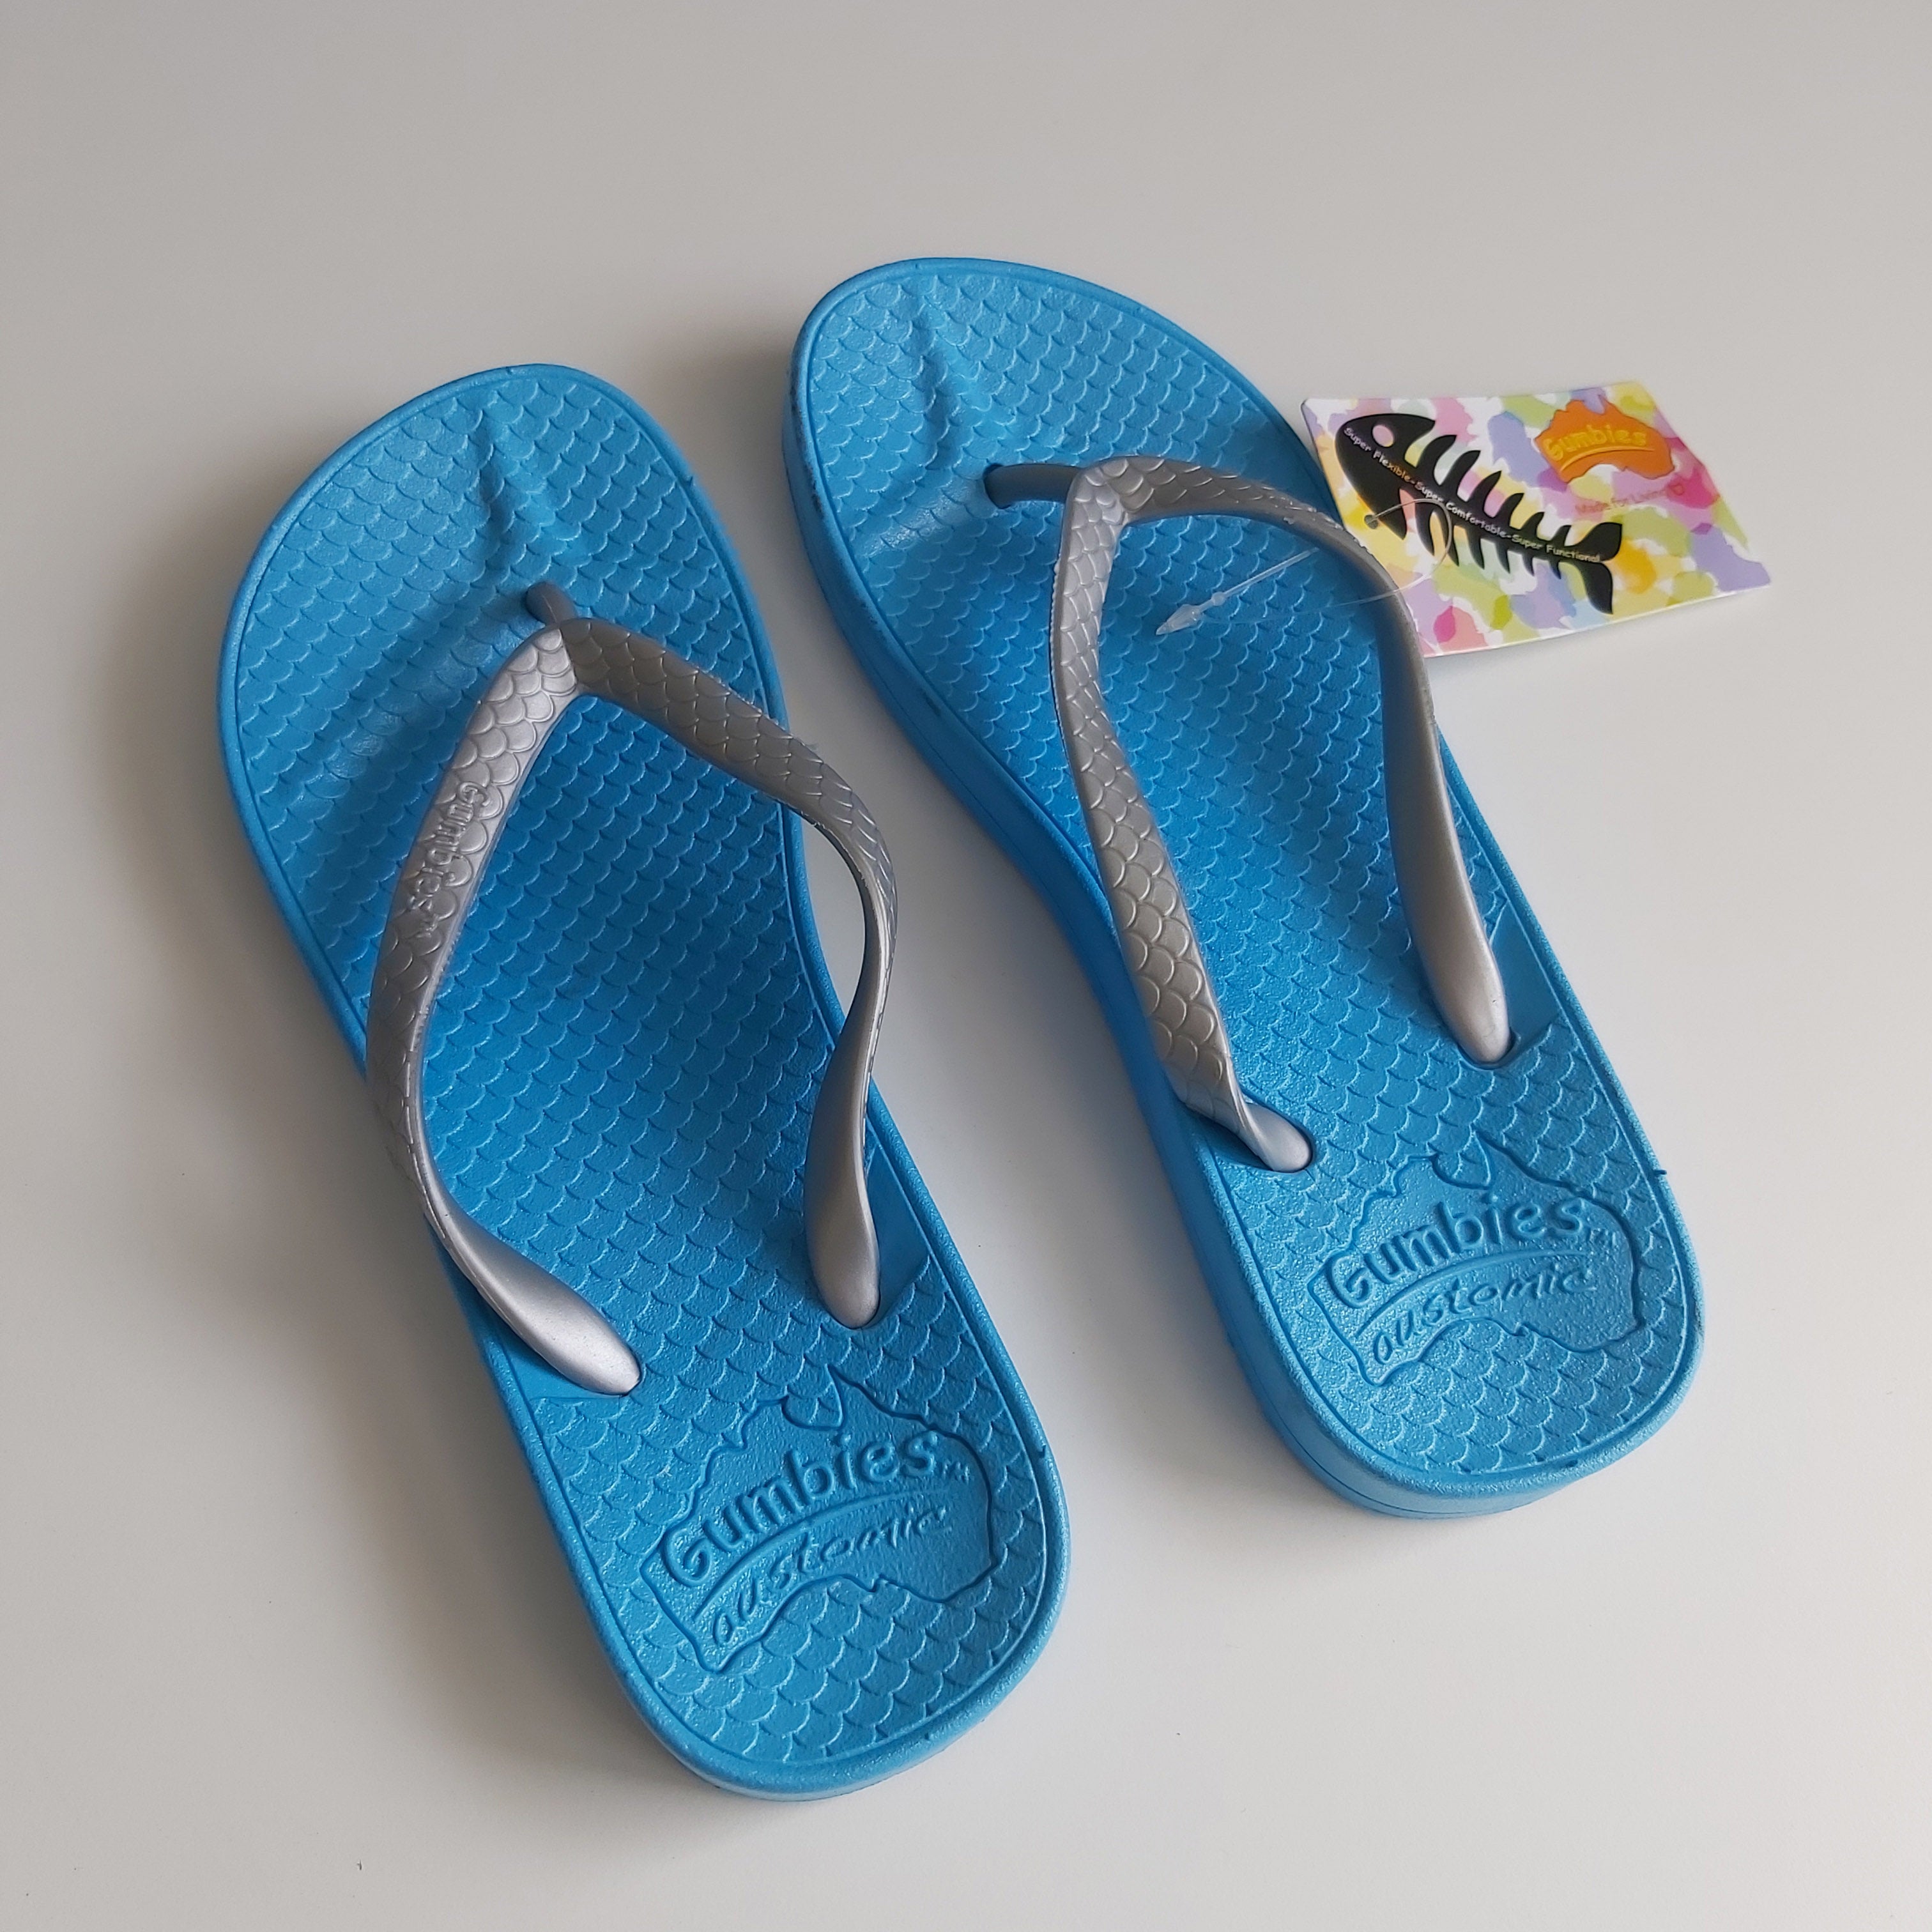 Gumbies Flip Flops -Aqua Blue with Silver Strap UK Size 2/3